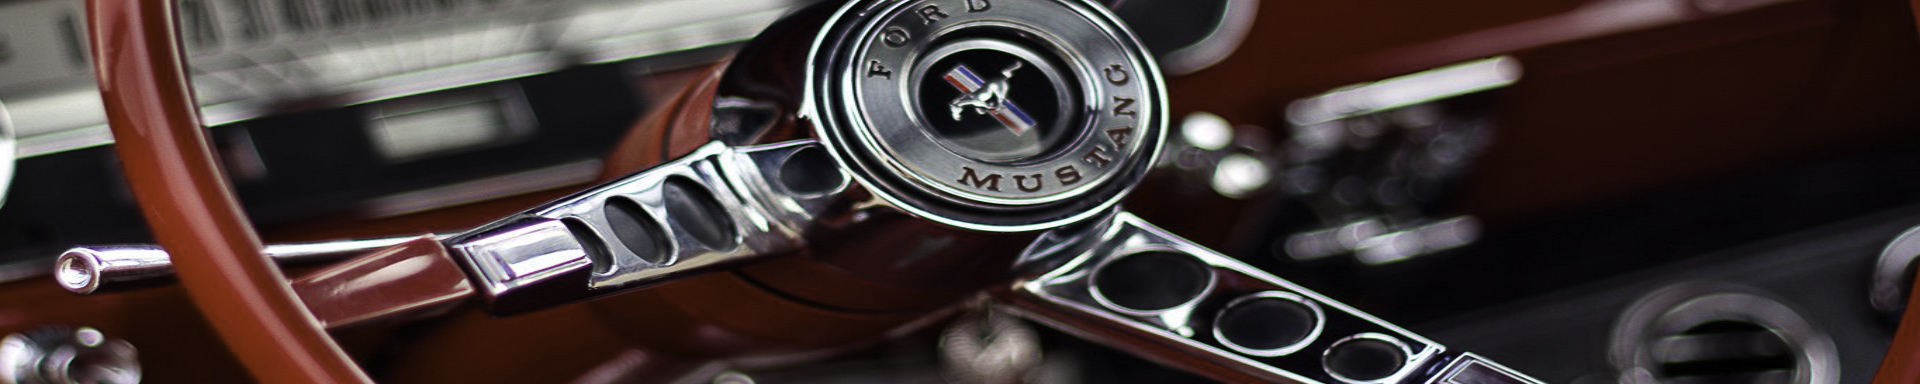 Classic Steering Wheels | GarageAndFab.com | Munro Industries gf-100103051403